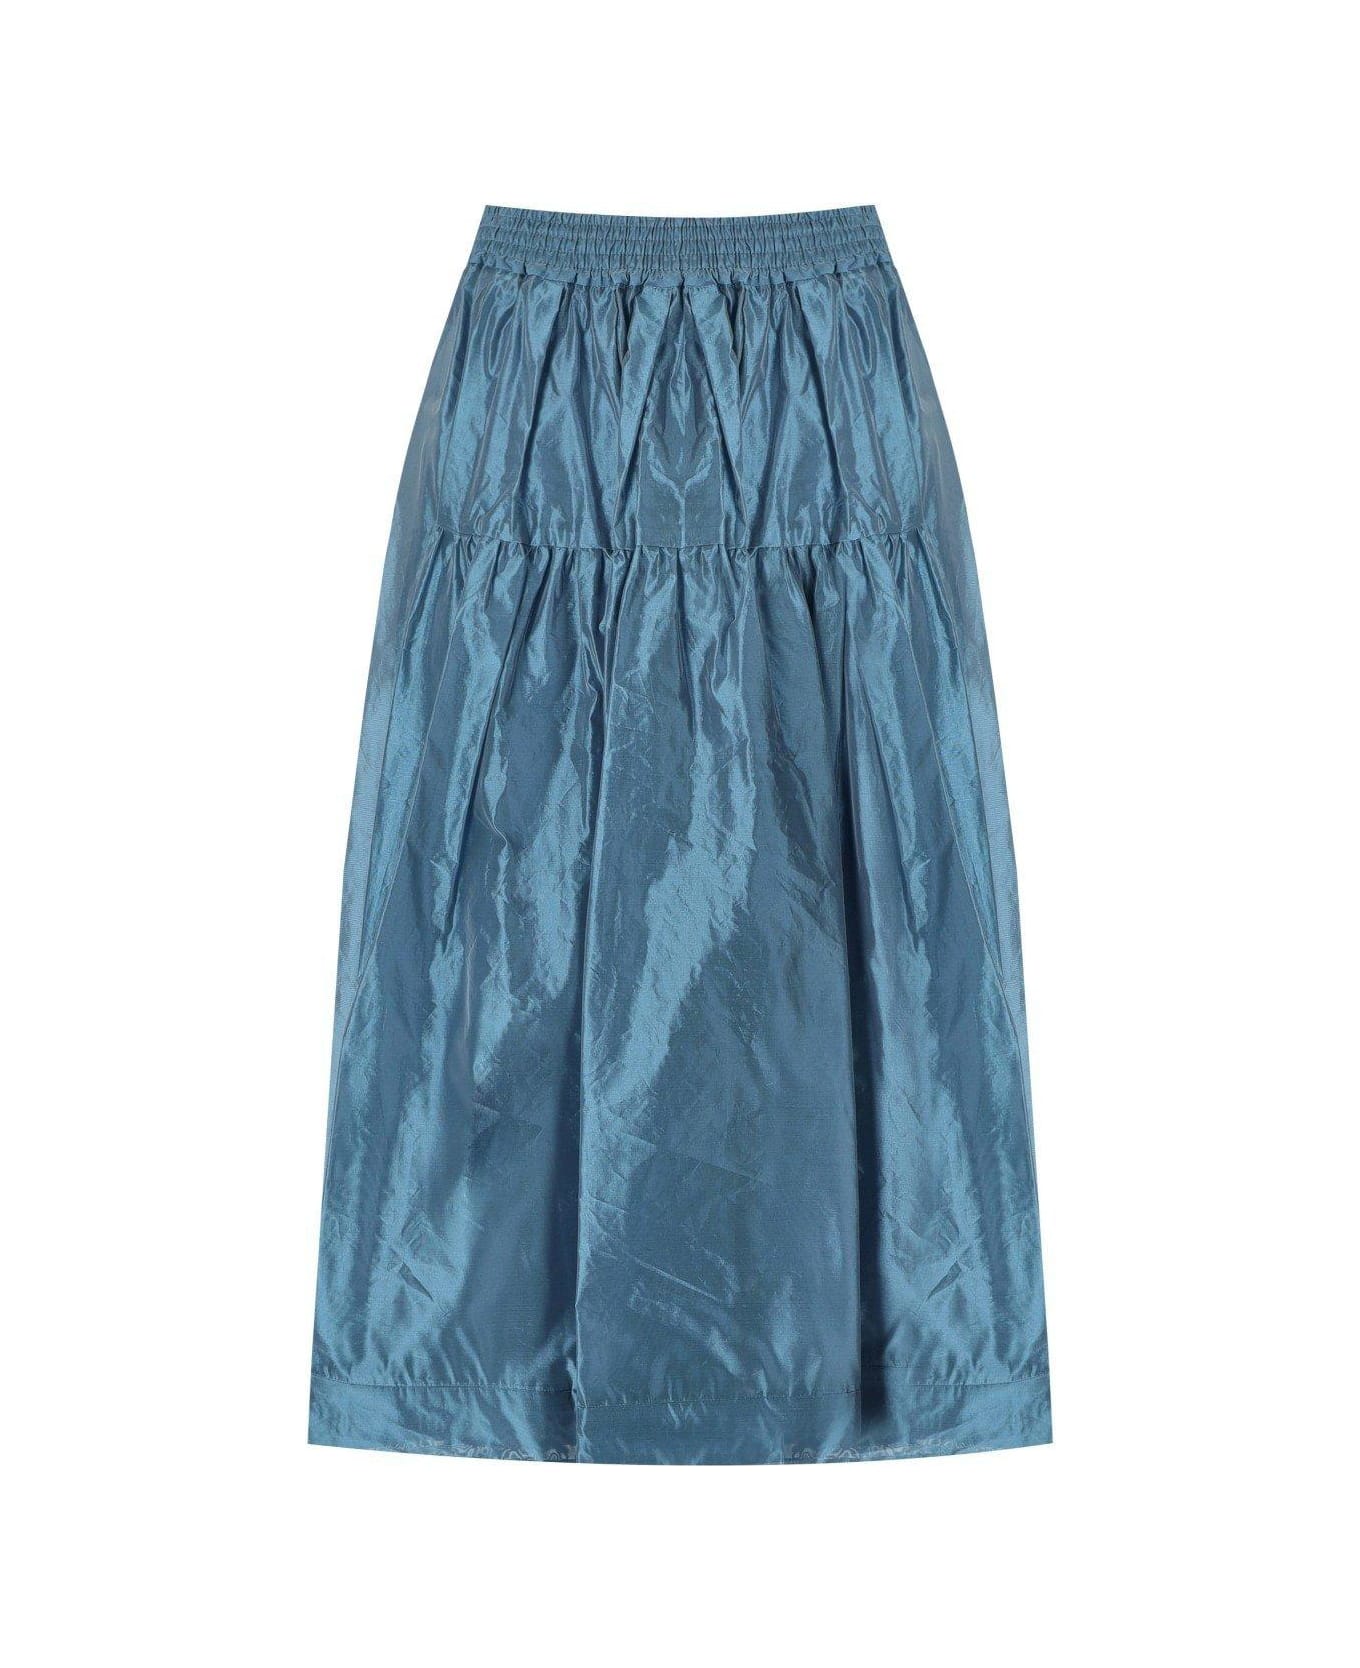 Weekend Max Mara Eros Gathered Skirt - Blu スカート